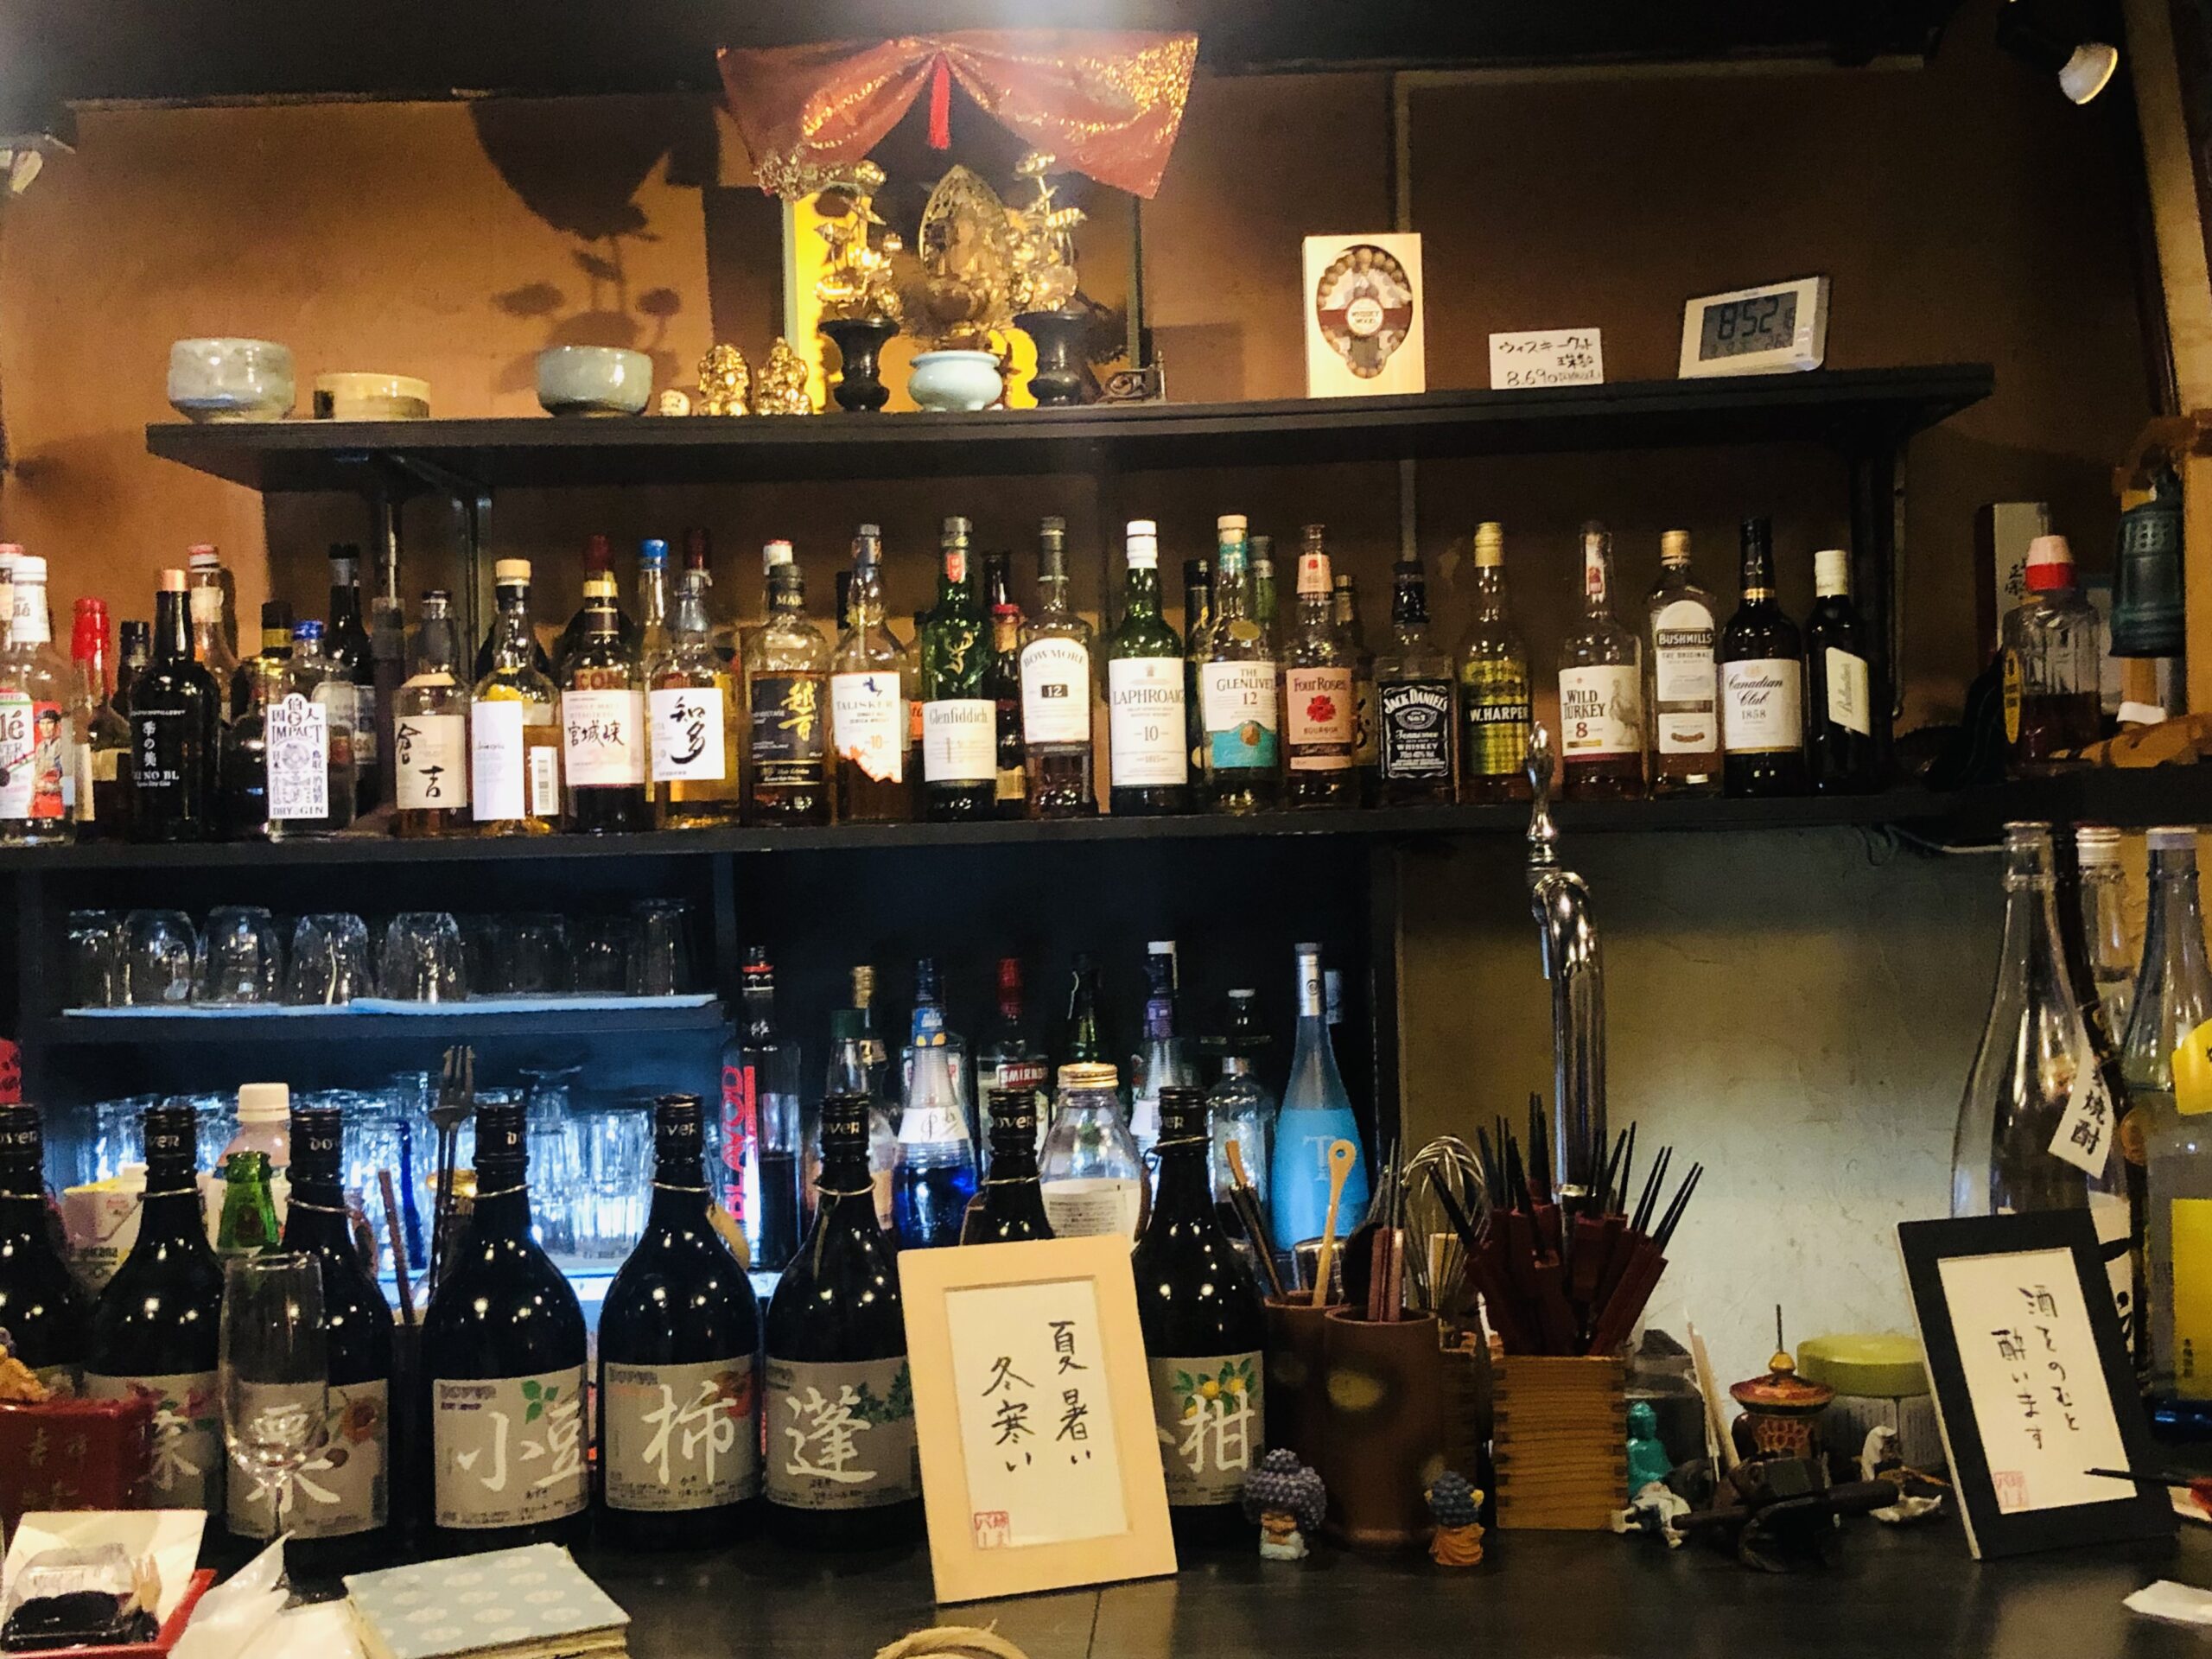 Monks’ Bar, a unique bar run by monks in Shinjuku, Tokyo